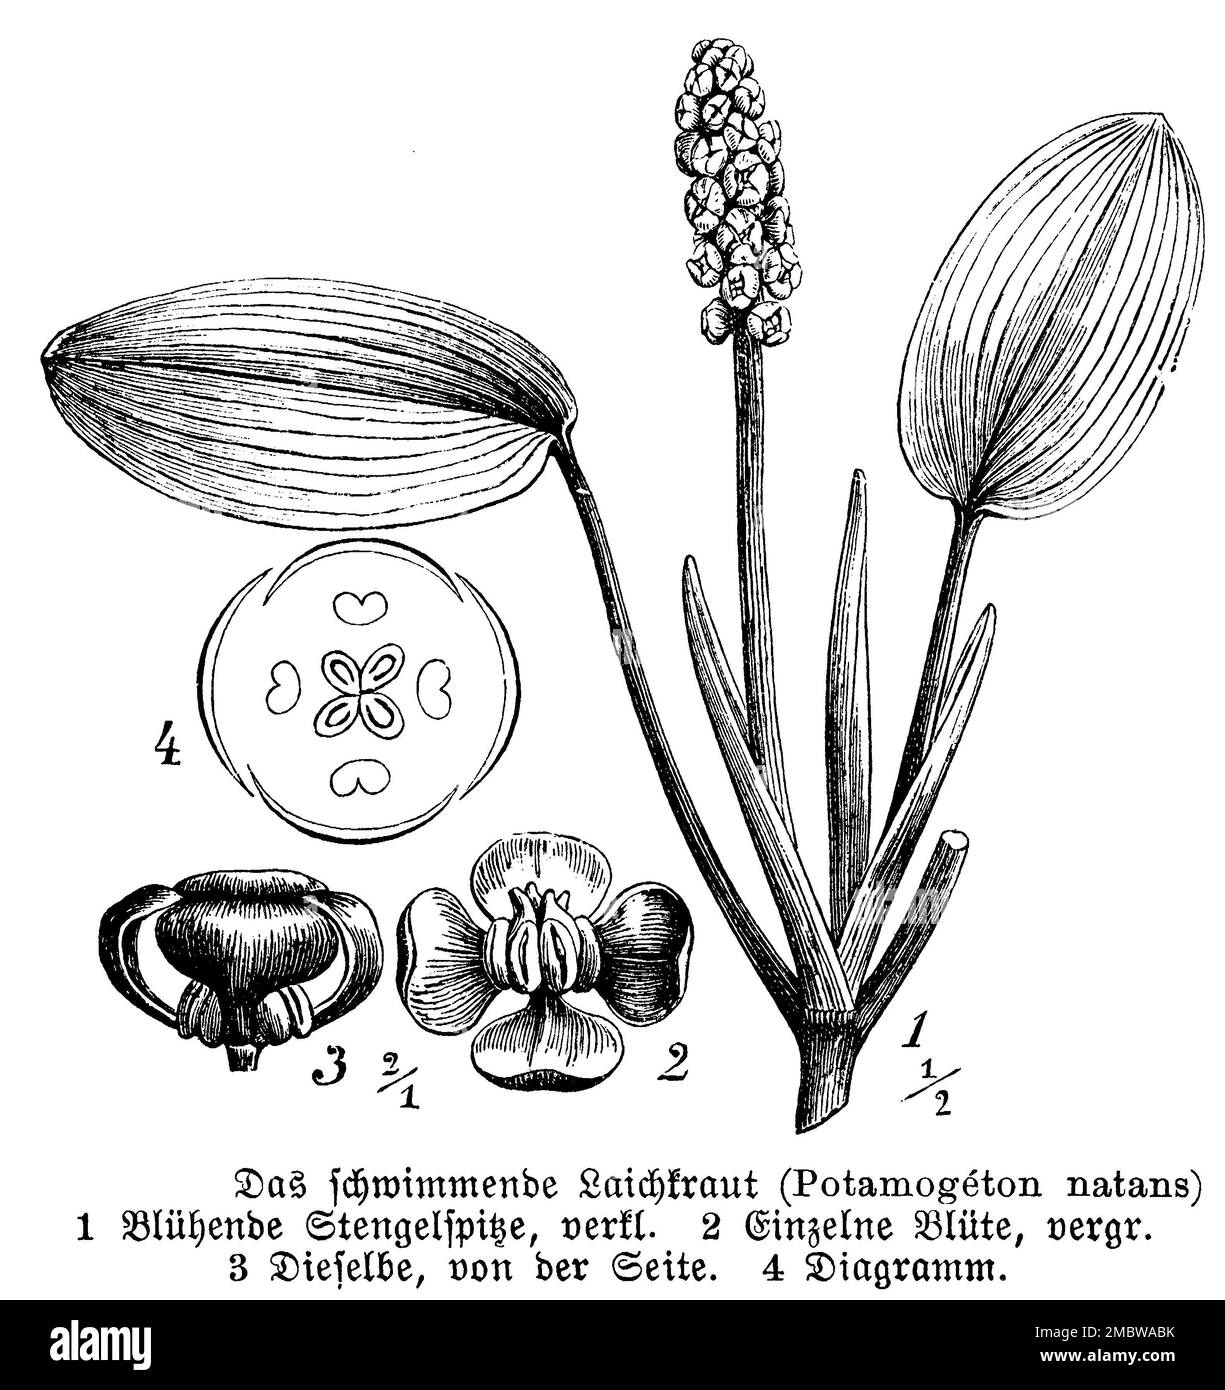 Floating Pondweed, Potamogeton natans, anonym (botany book, 1888), Laichkraut, Potamot, Flottant Stock Photo